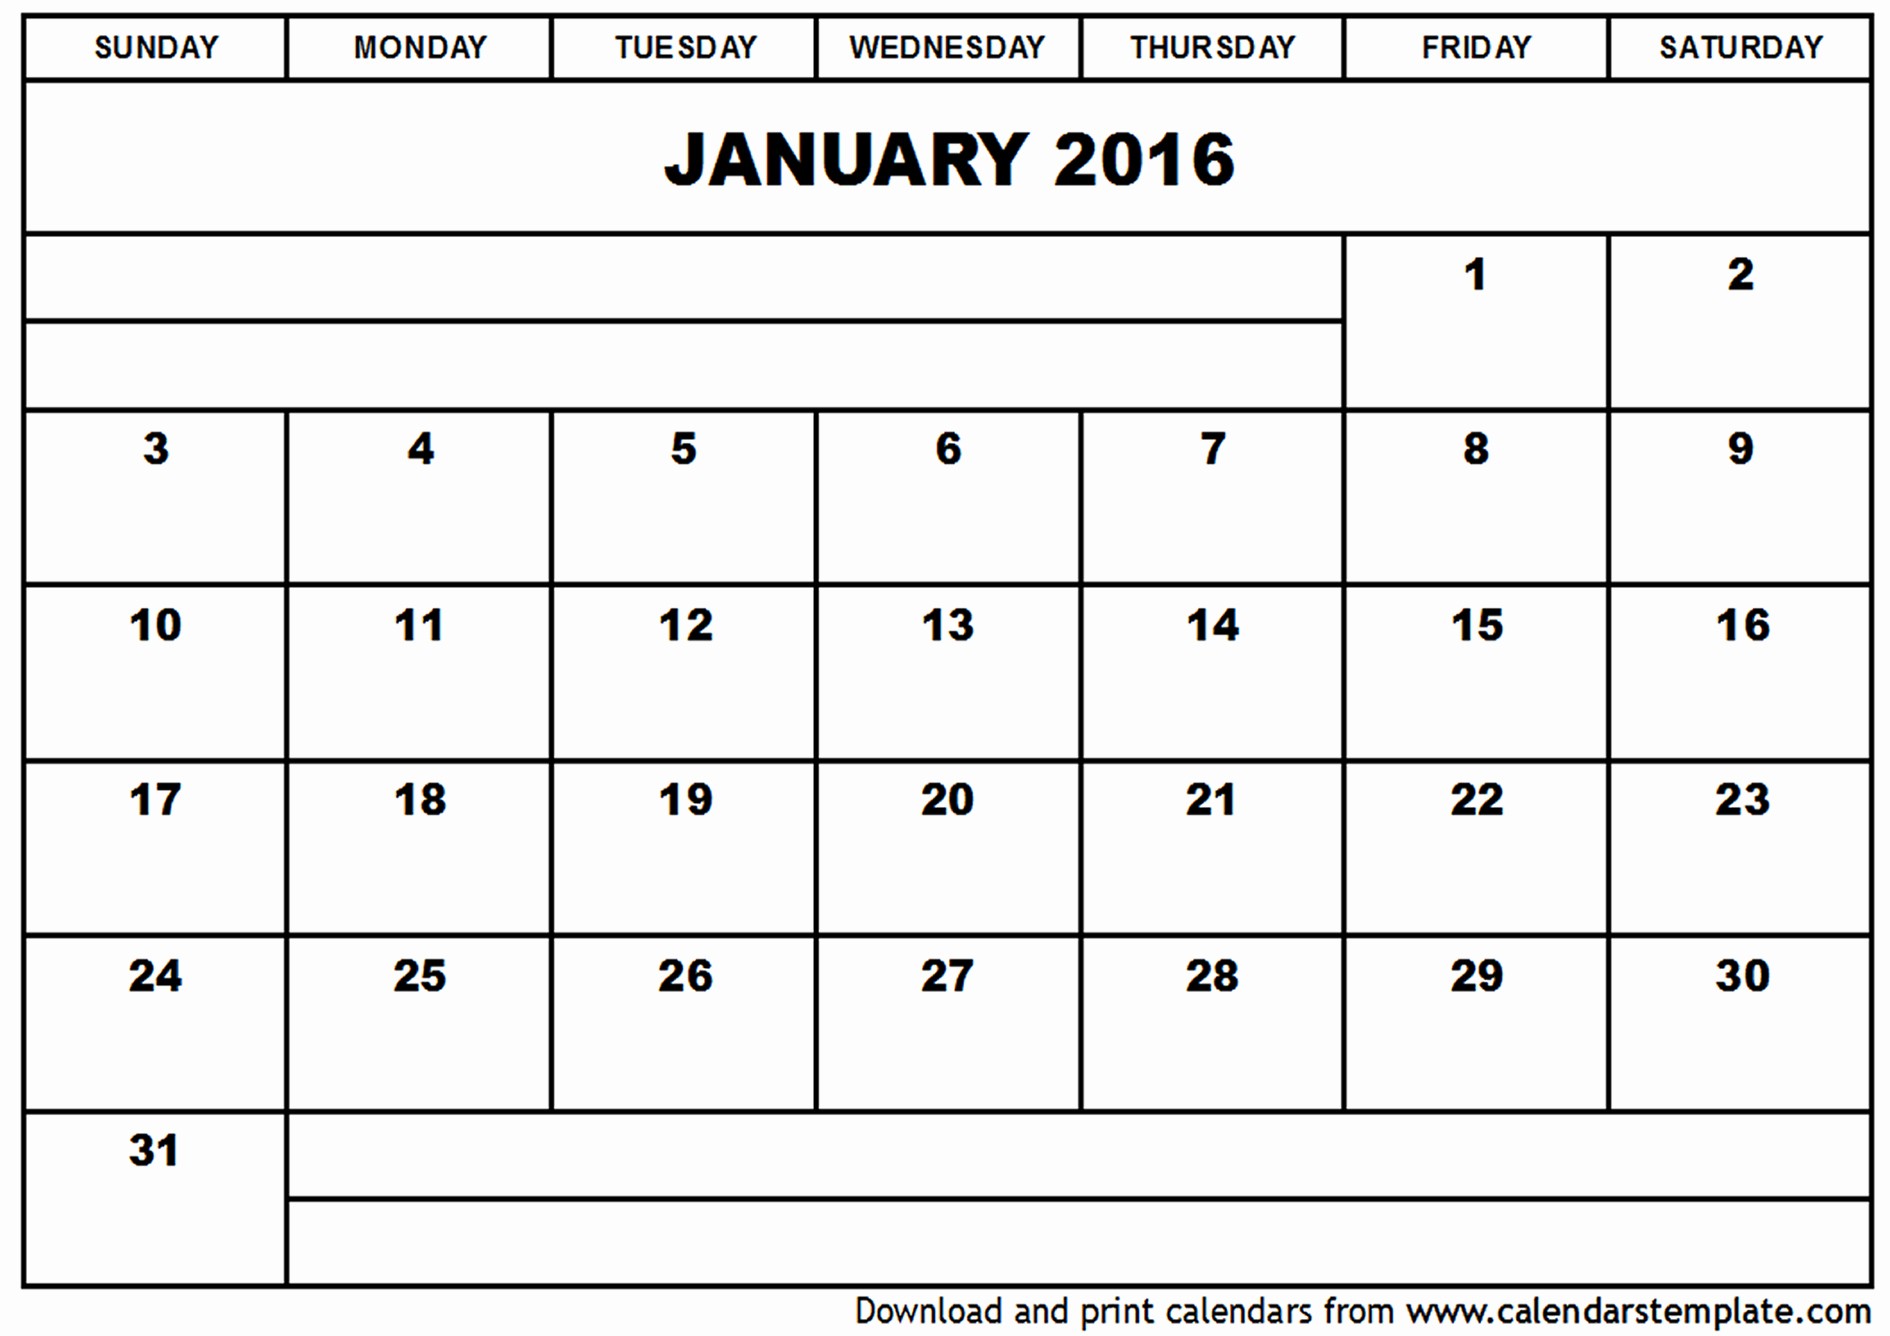 Free Printable Calendars 2016 Templates Luxury January 2016 Calendar Template